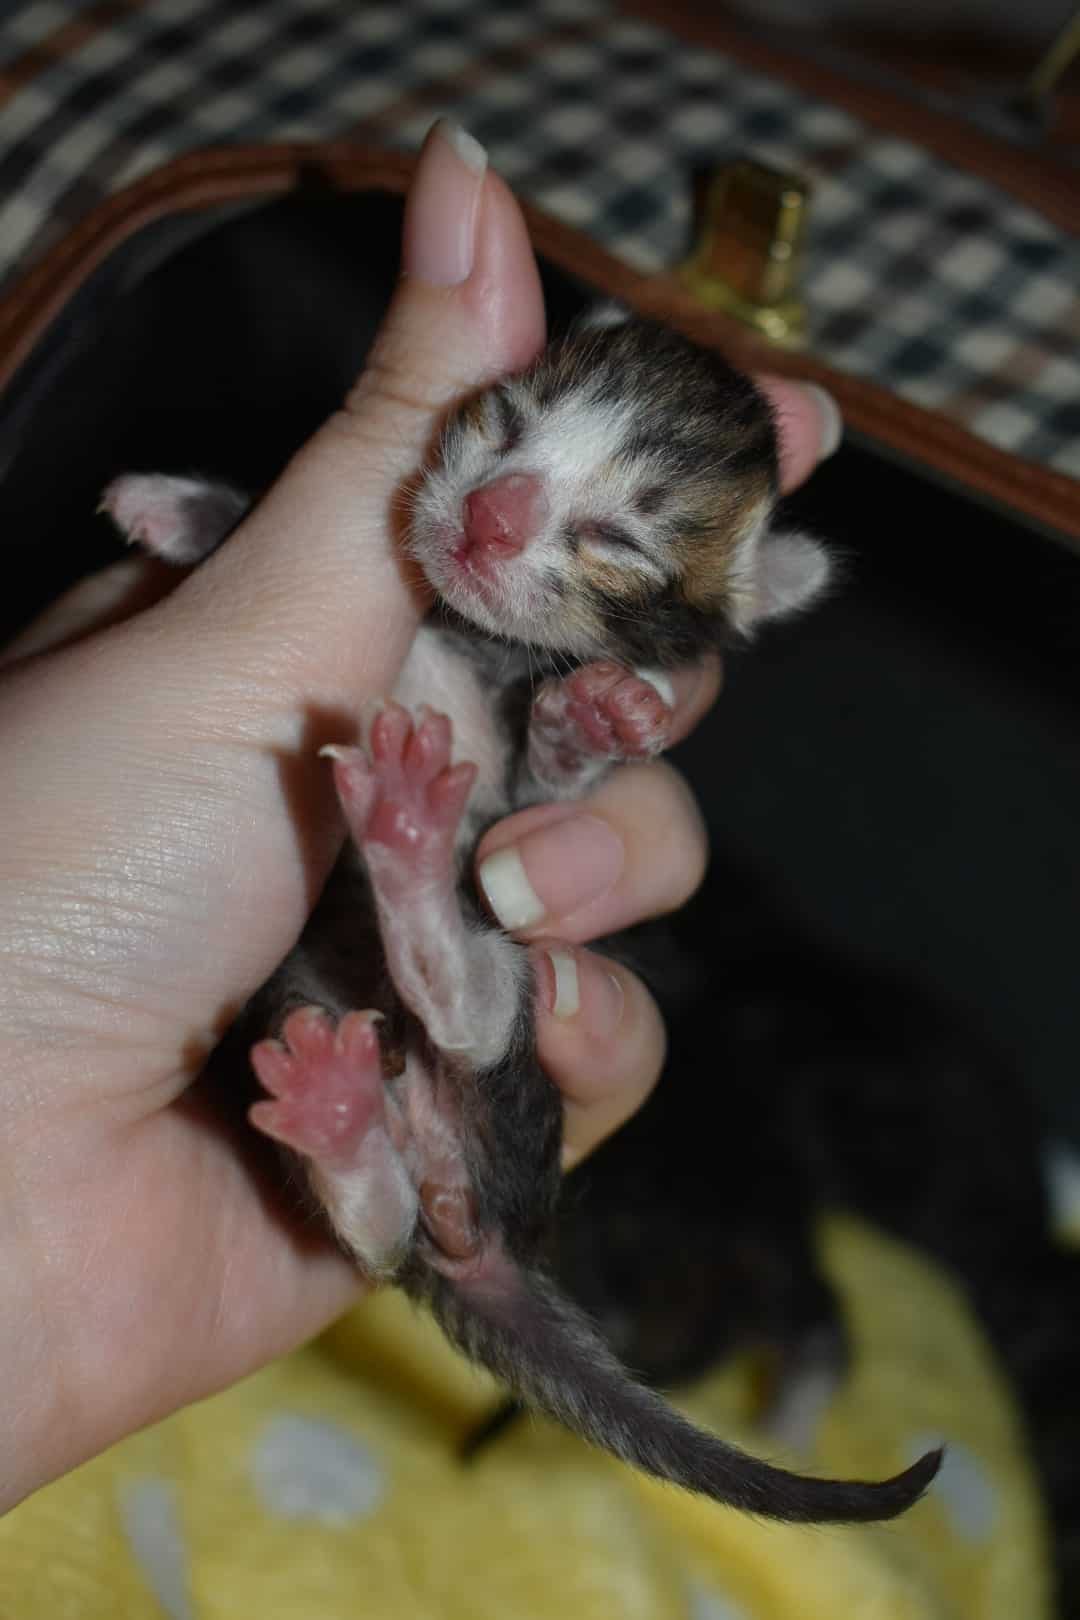 newborn kittens 1 day old